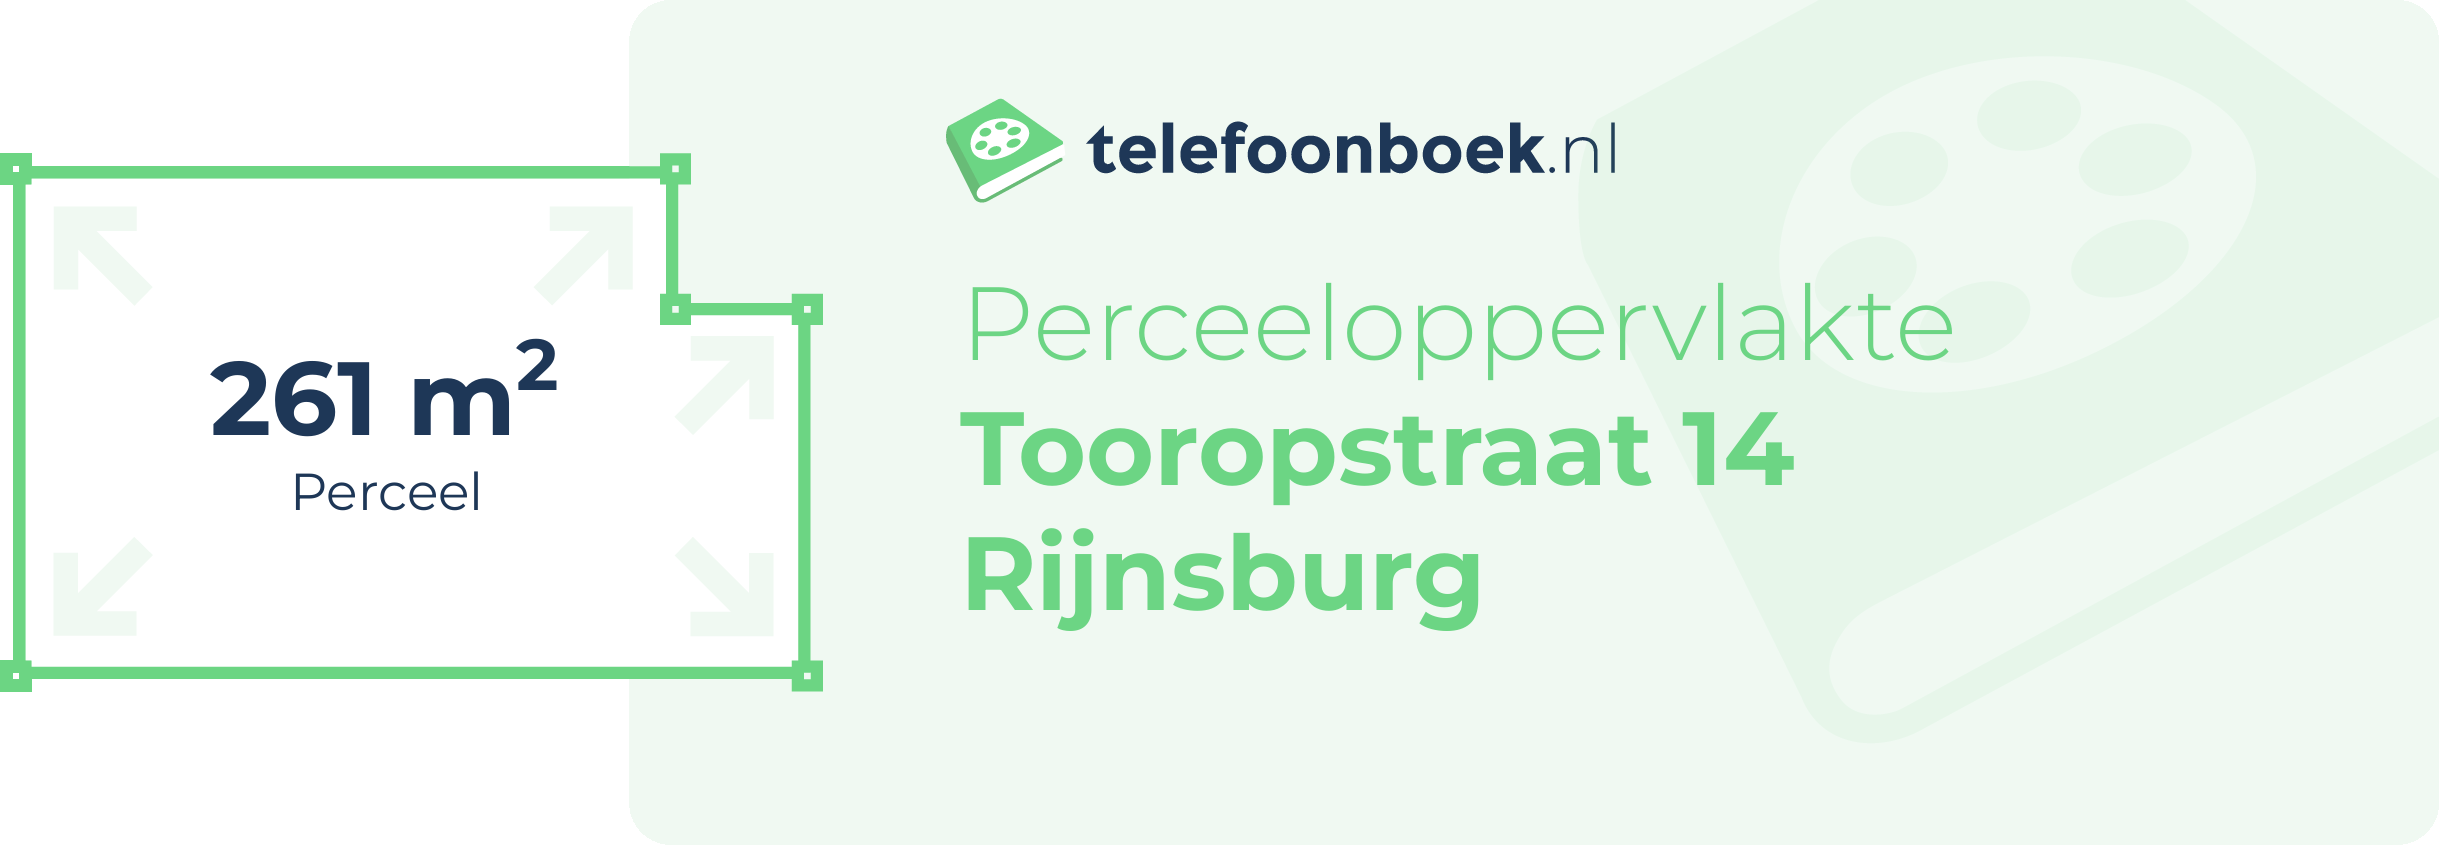 Perceeloppervlakte Tooropstraat 14 Rijnsburg